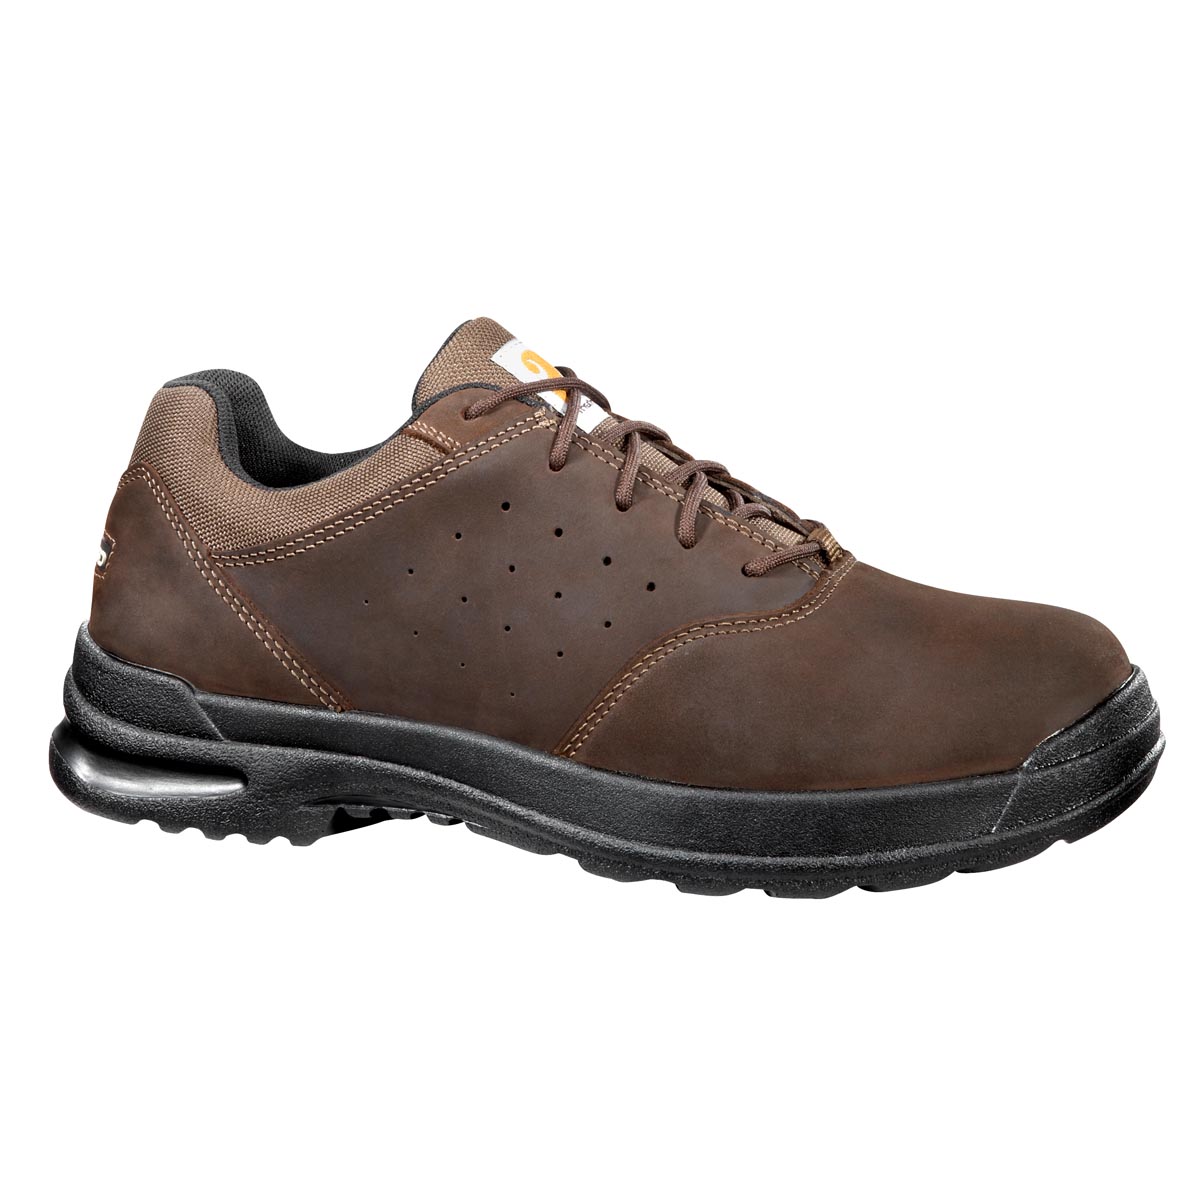 Carhartt Men's 3 Inch Dark Brown Oxford Walking Shoe